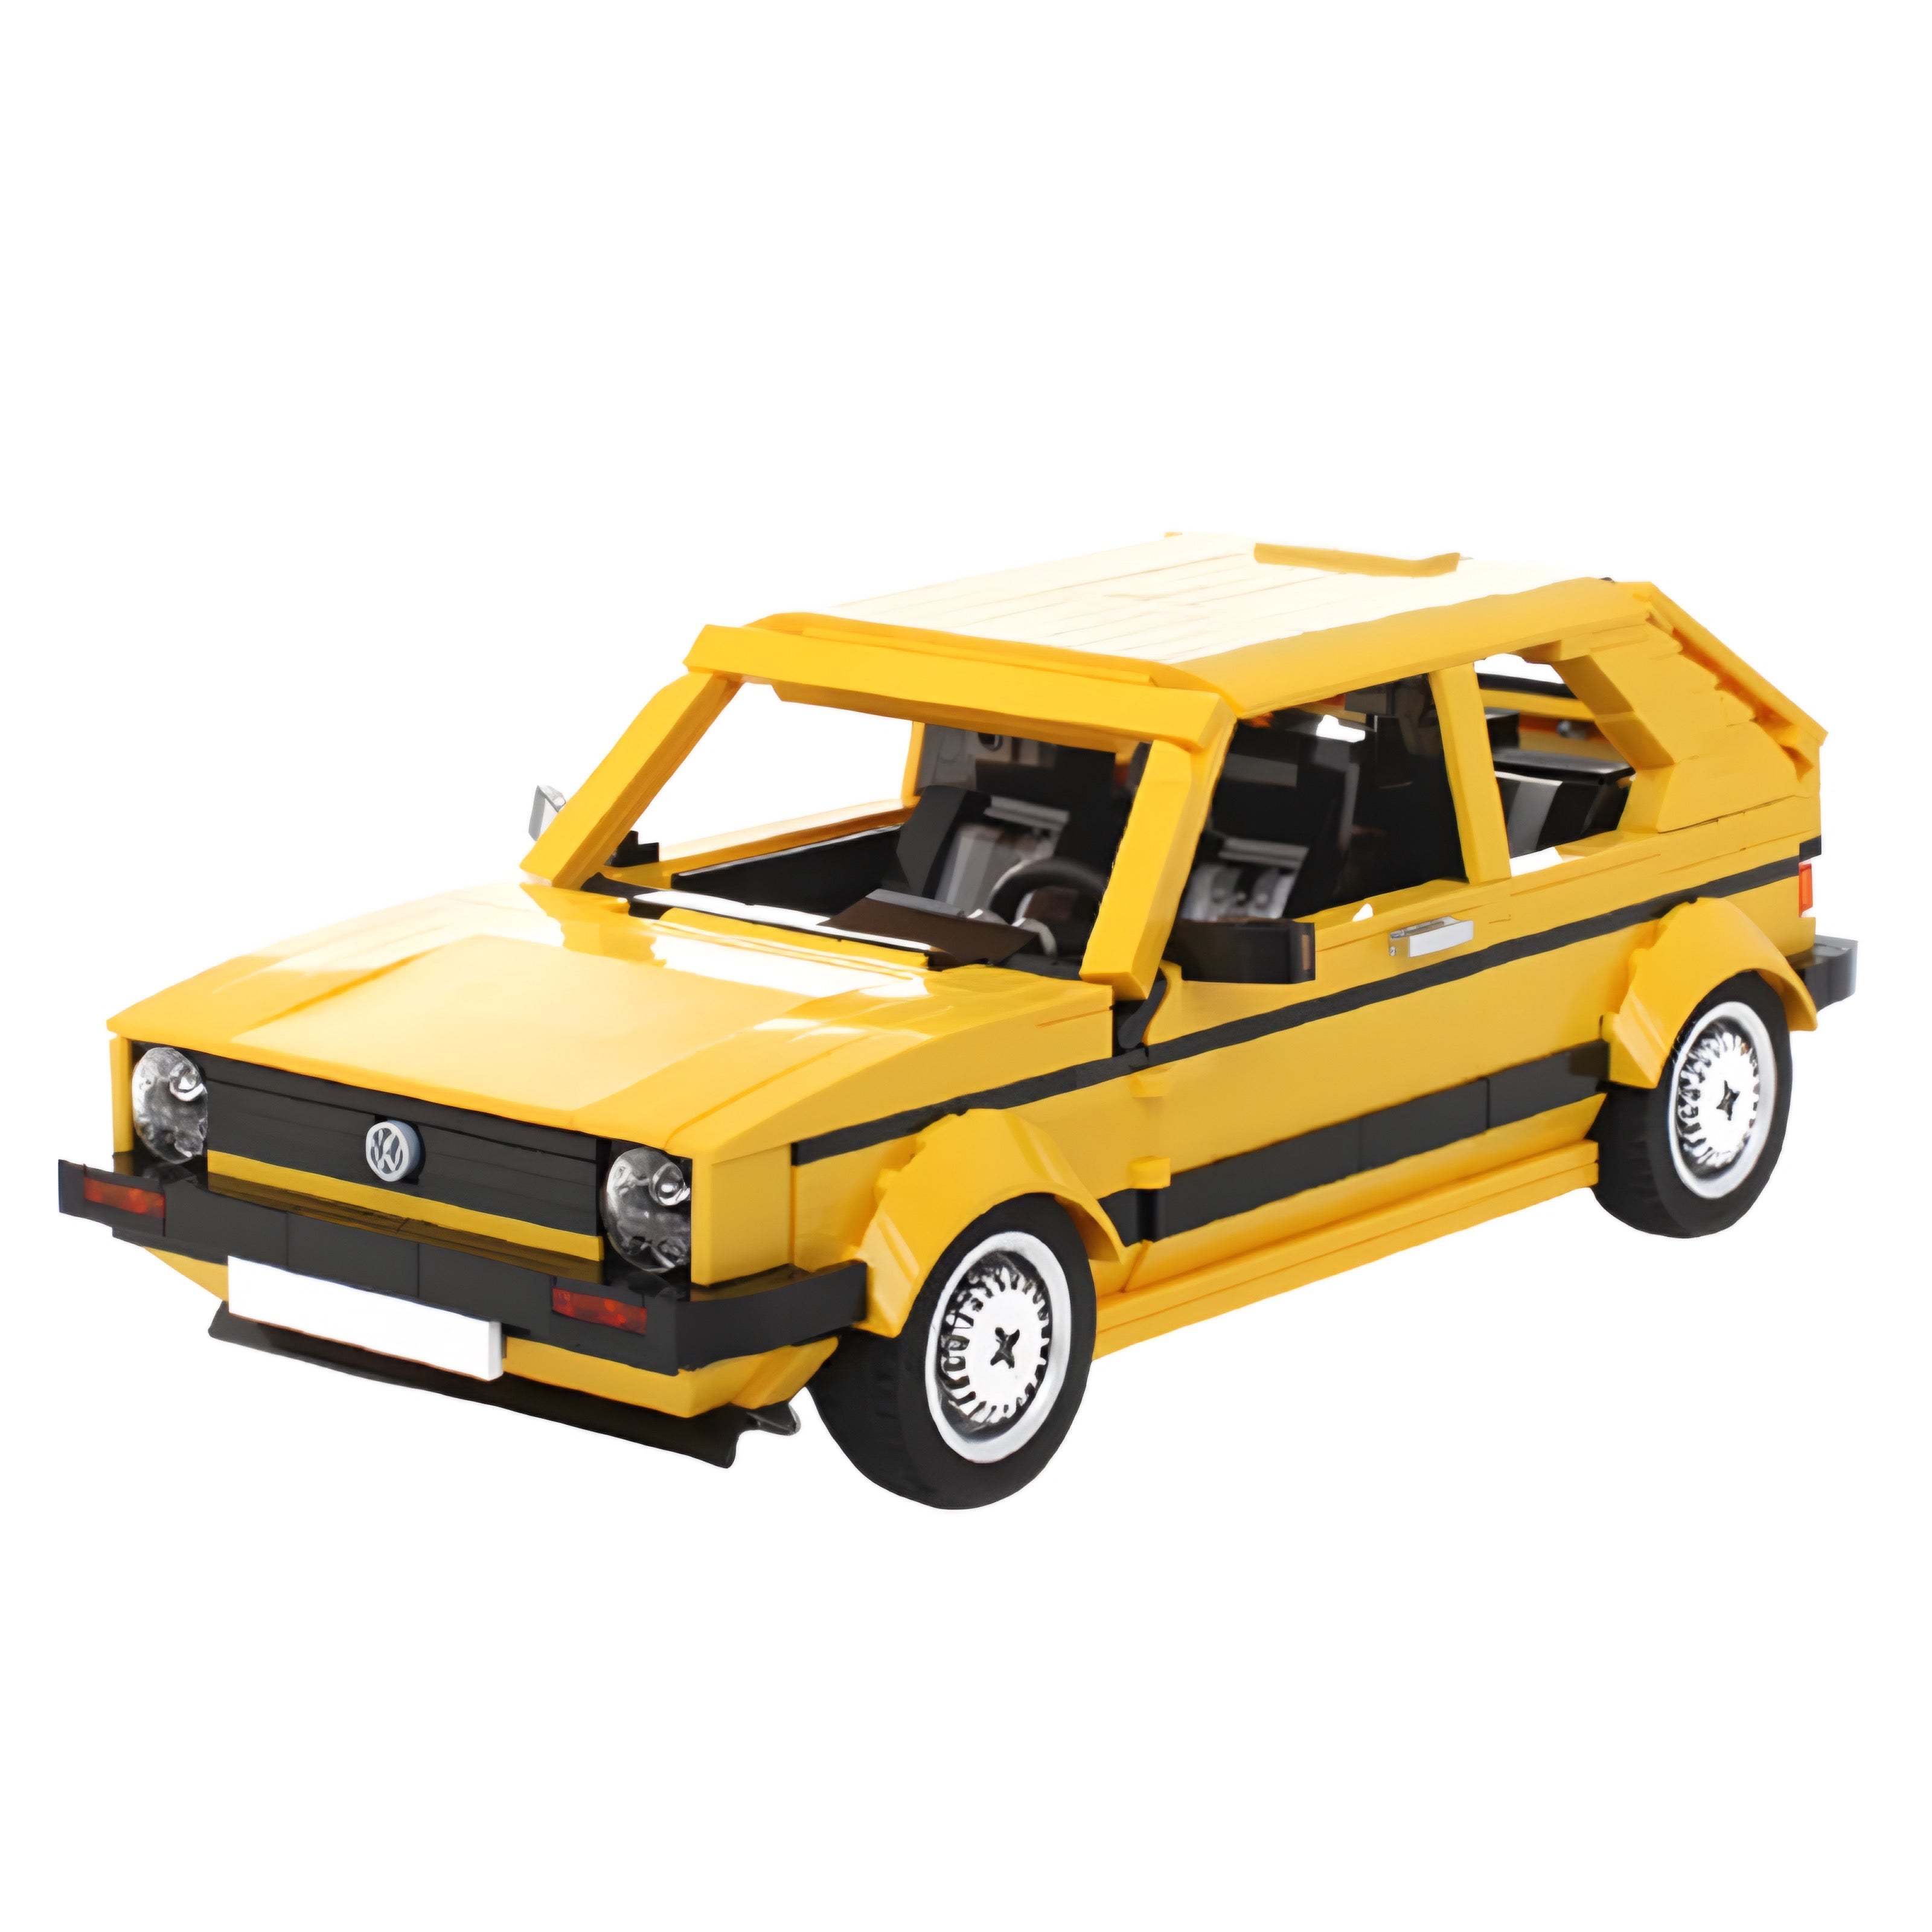 VW Golf GTI MKI Hatchback | s set, compatible with Lego